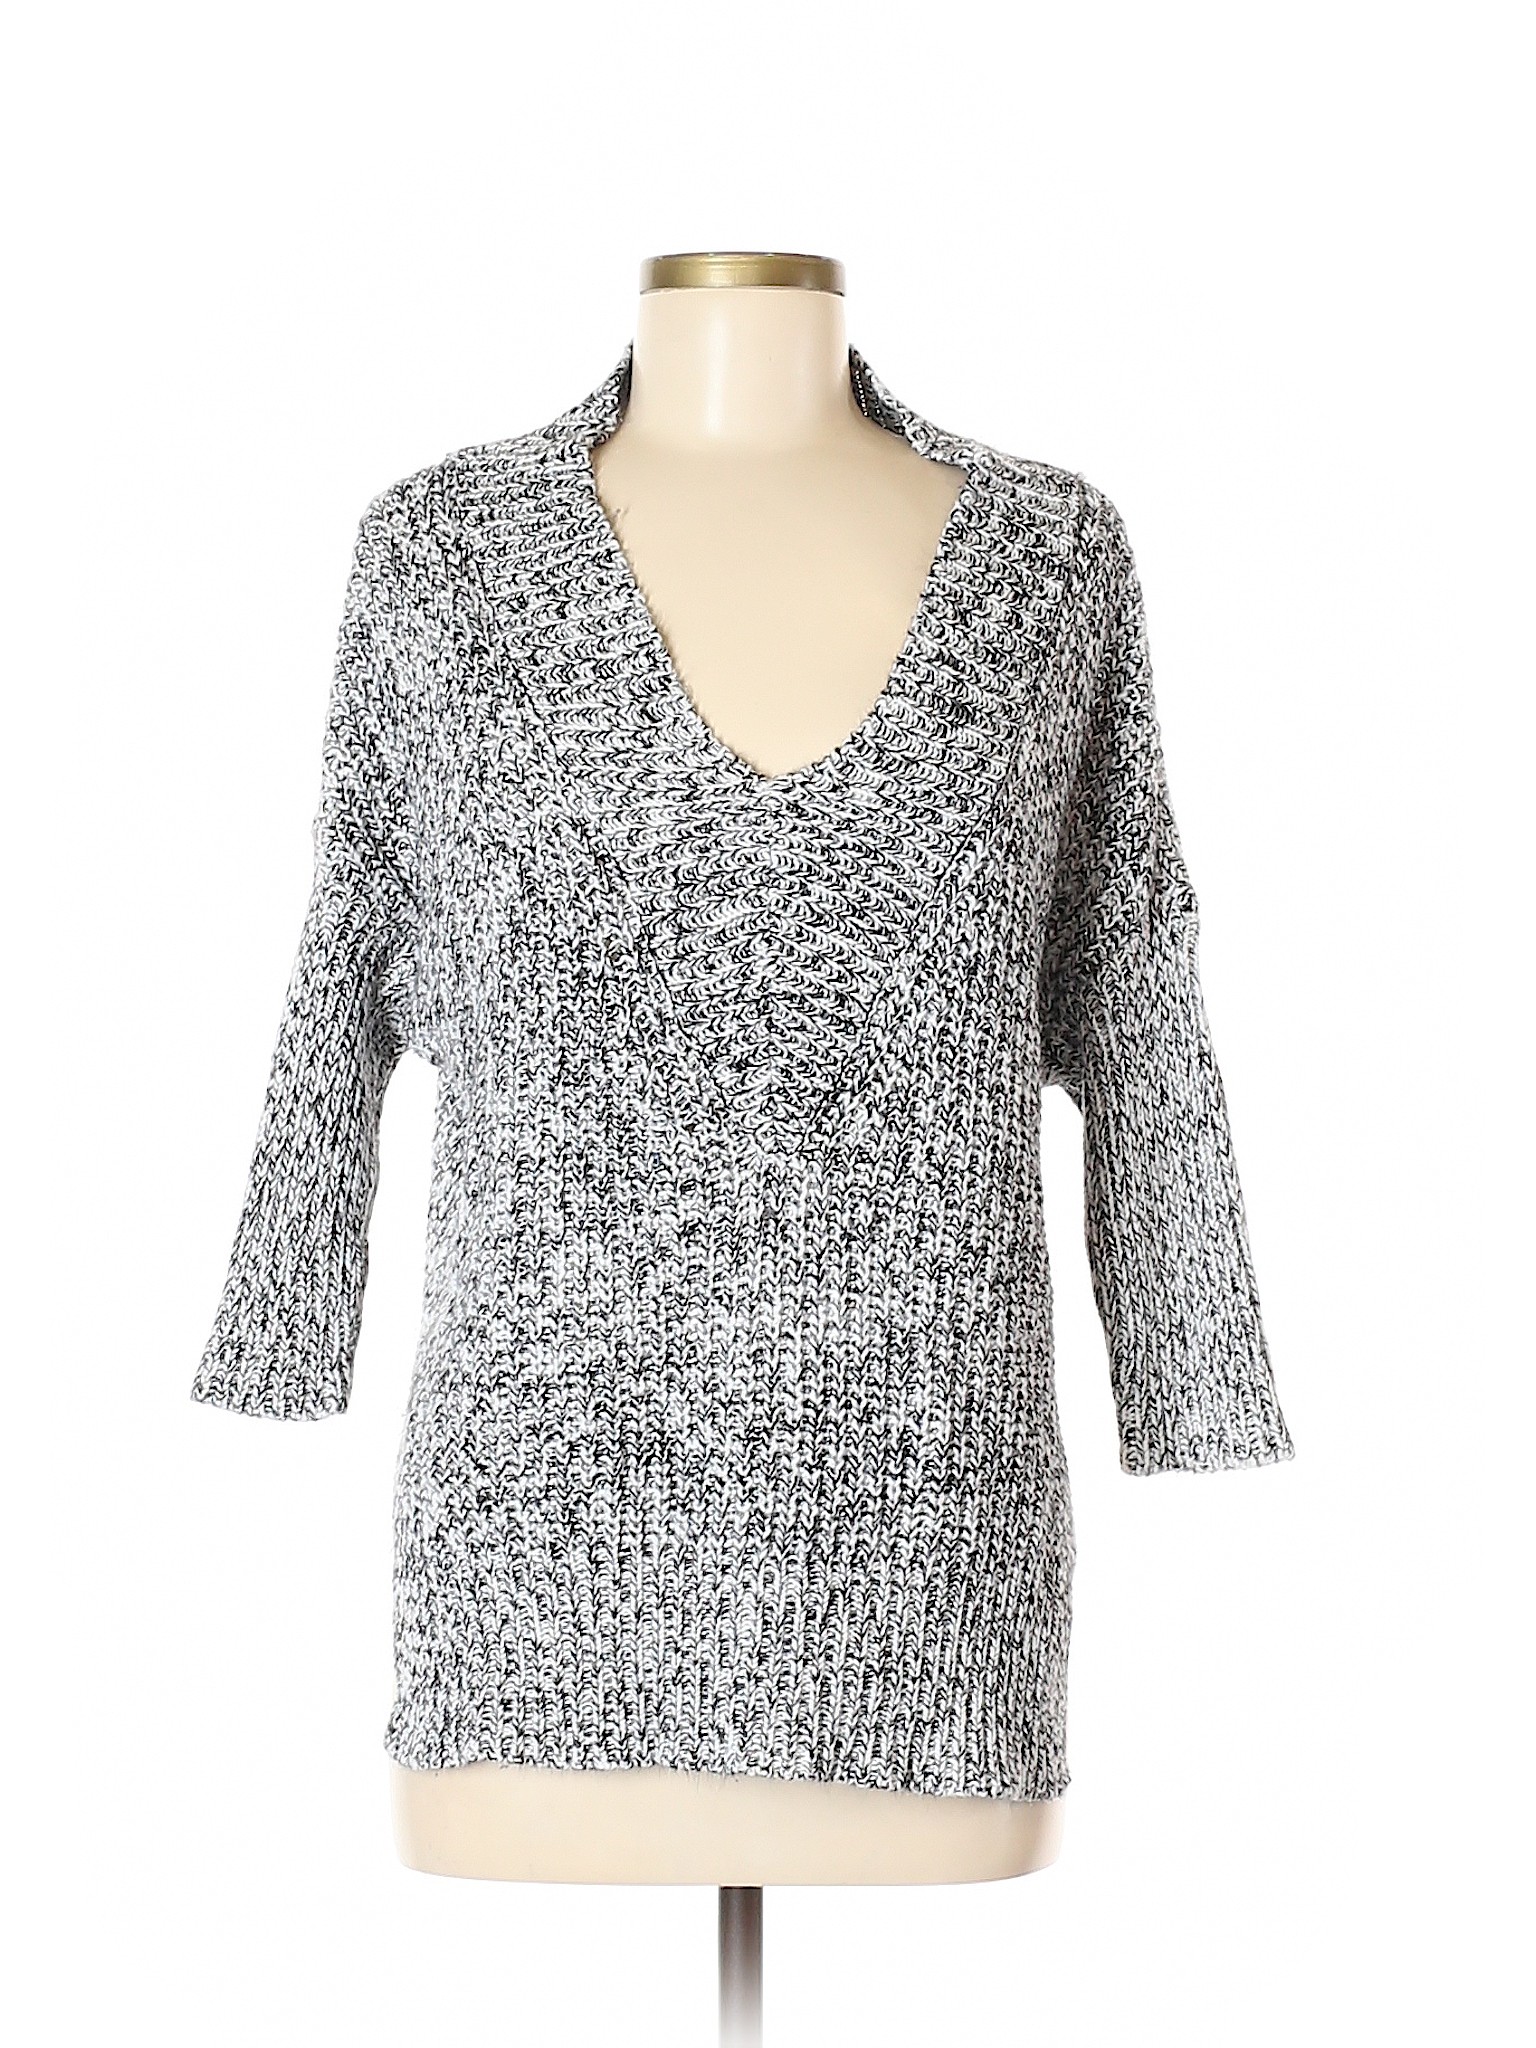 Rd Style Women Black Pullover Sweater Med | eBay